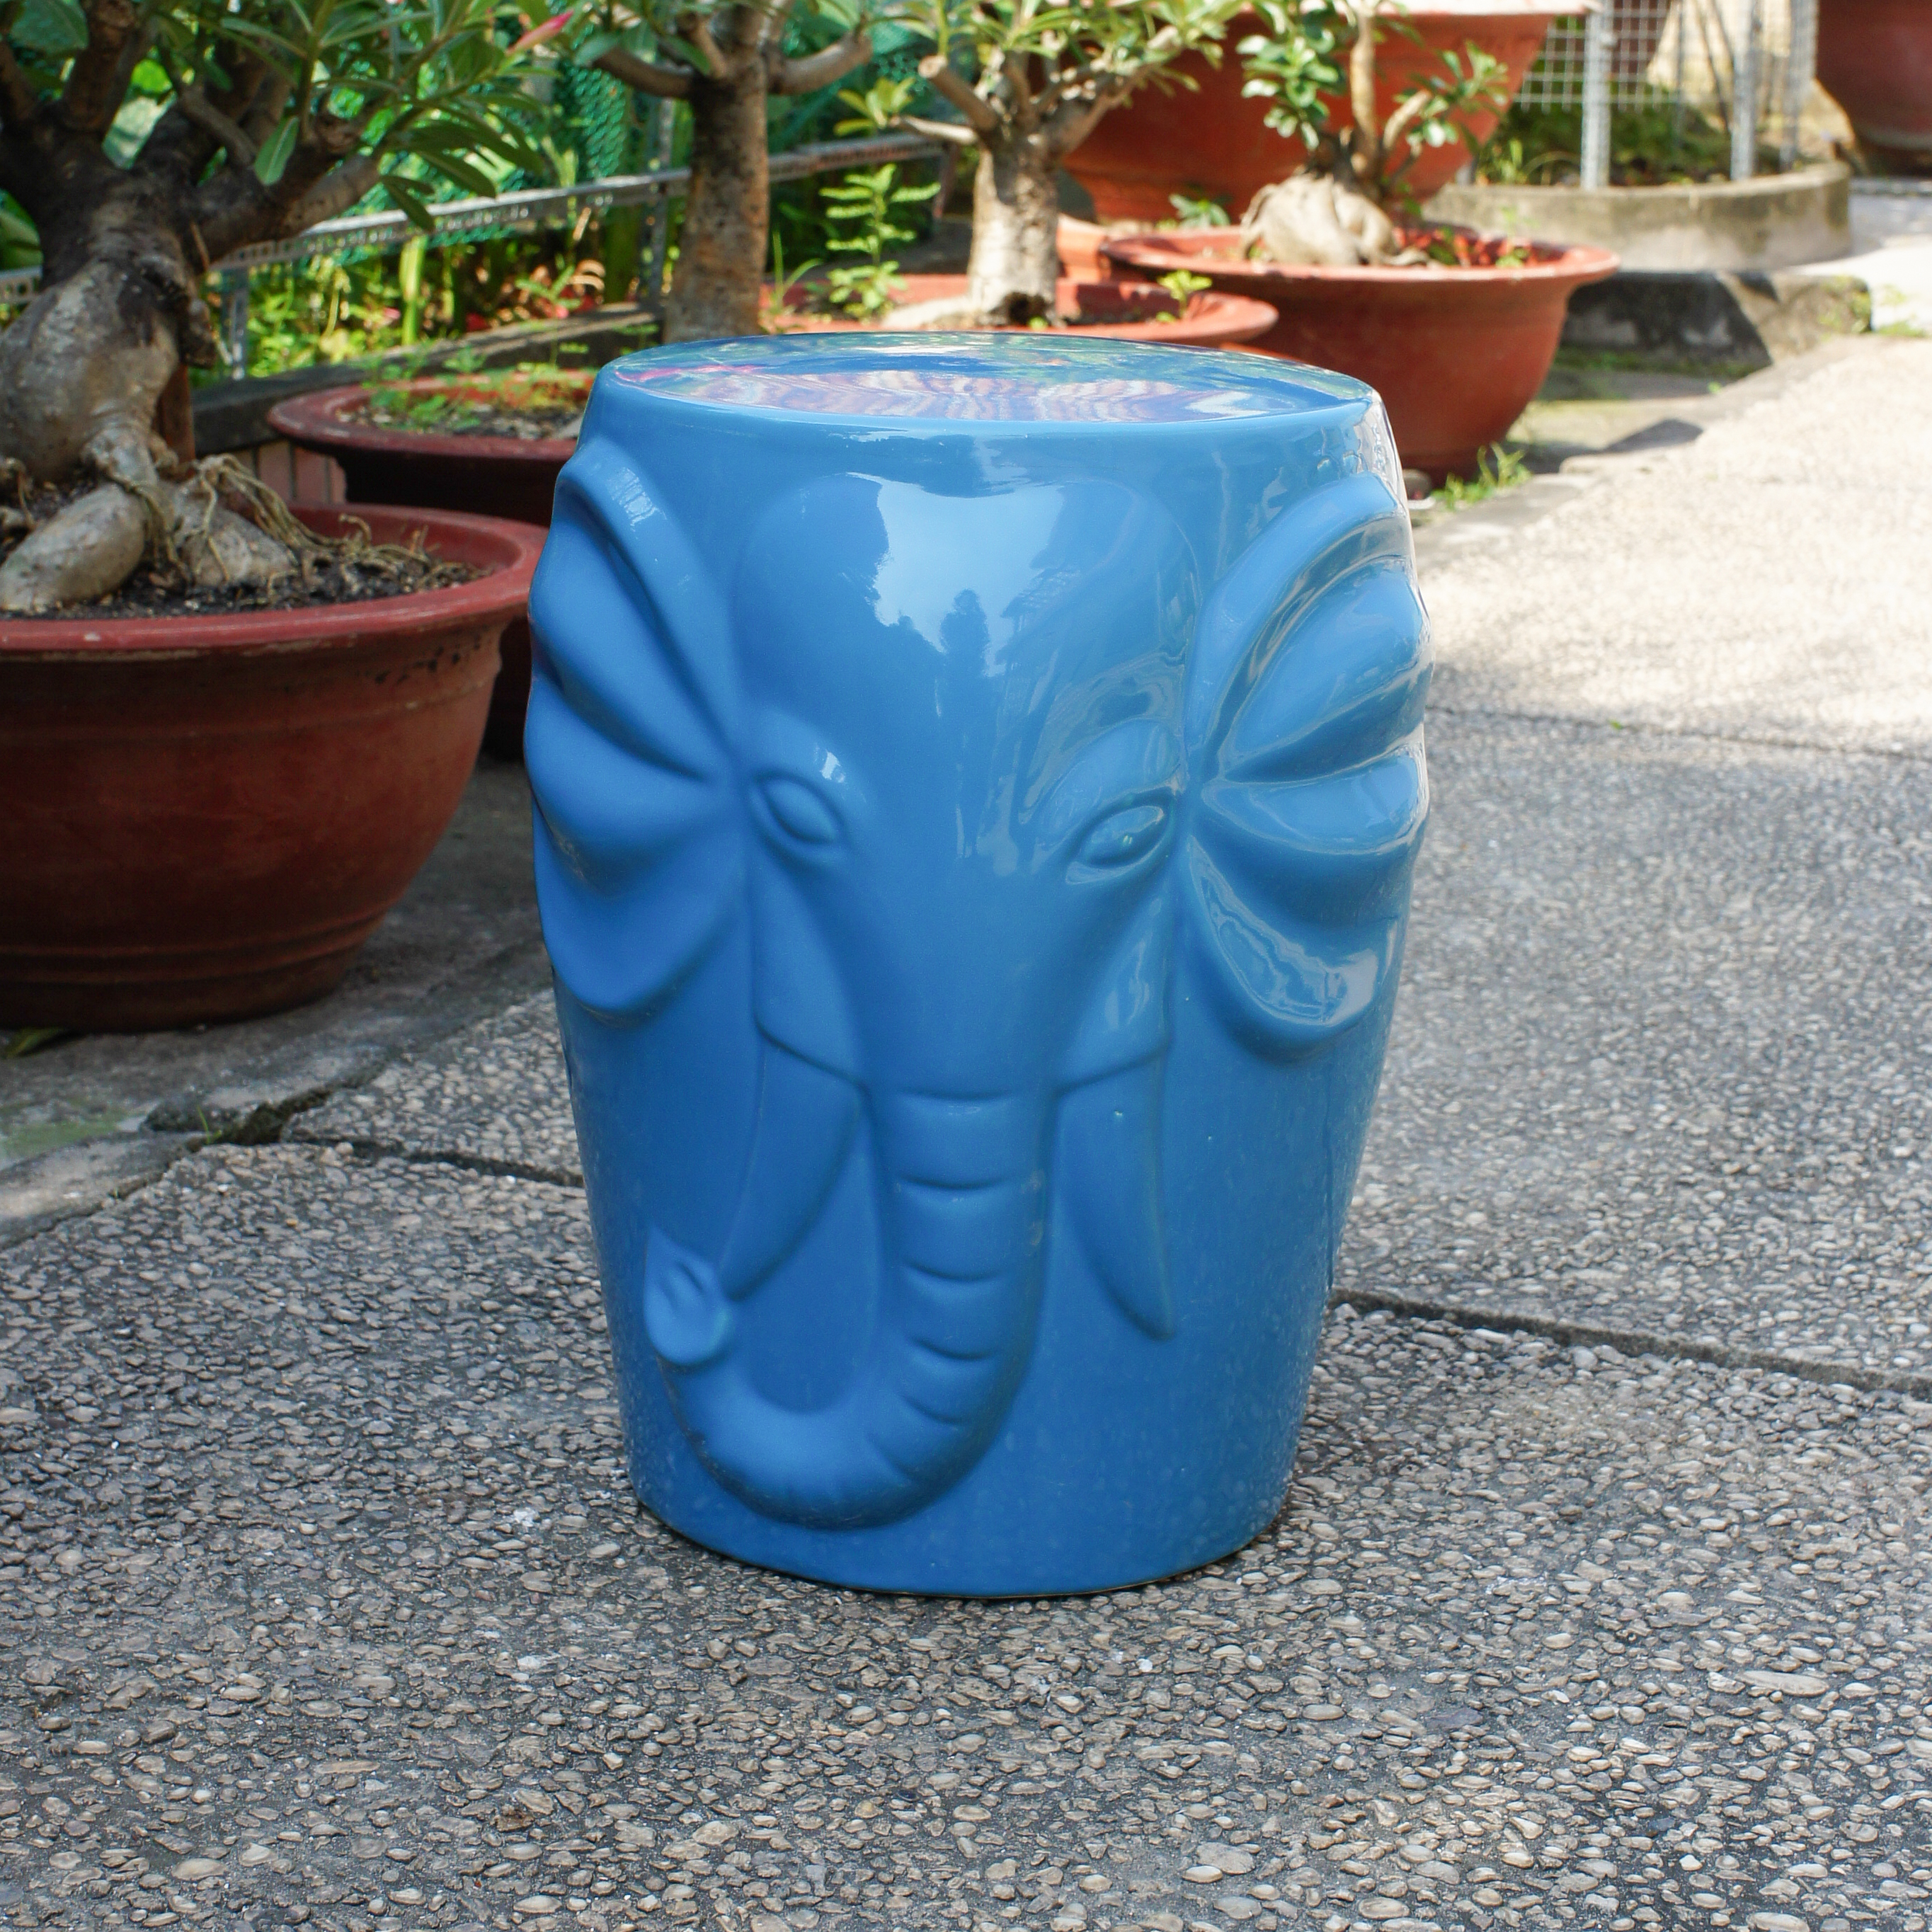 International Caravan Wild Elephant Drum Ceramic Garden Stool - image 1 of 2